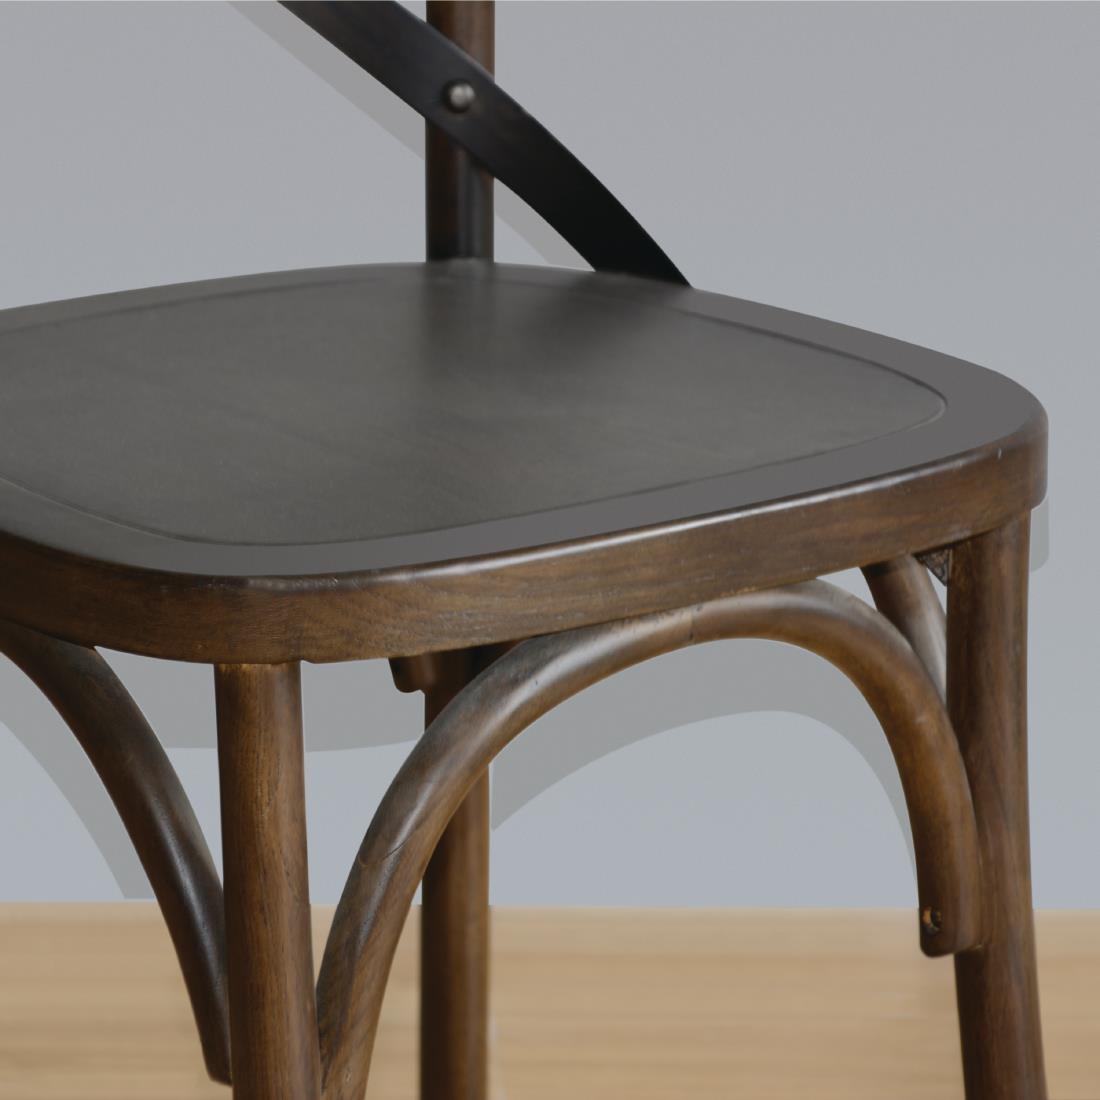 GG658 - Bolero Wooden Dining Chair with Metal Cross Backrest (Walnut Finish) (Pa - GG658  - 8